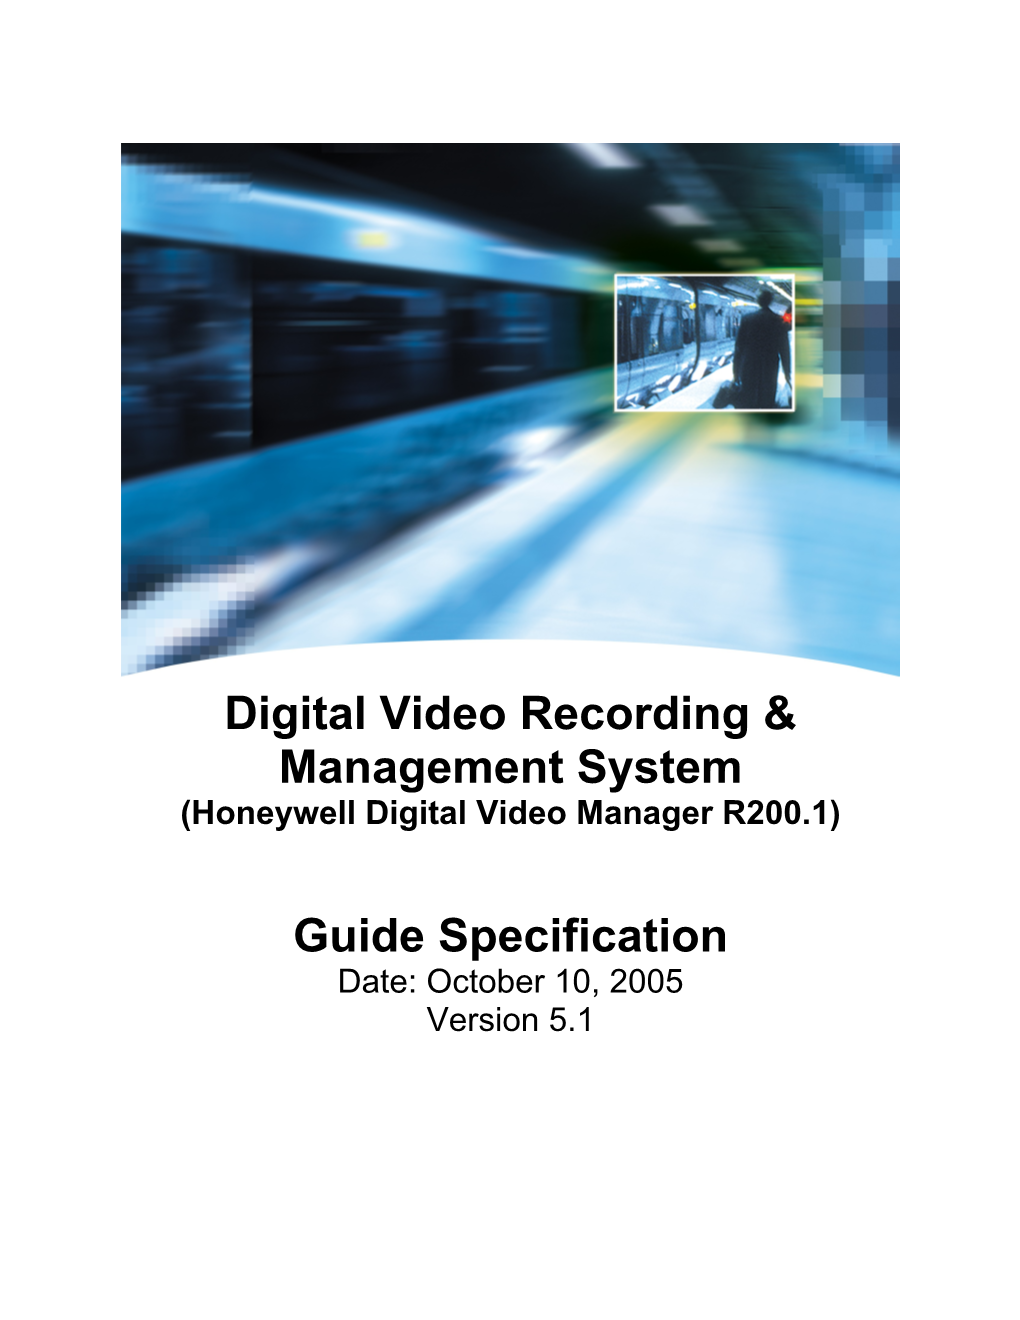 Honeywell Digital Video Manager